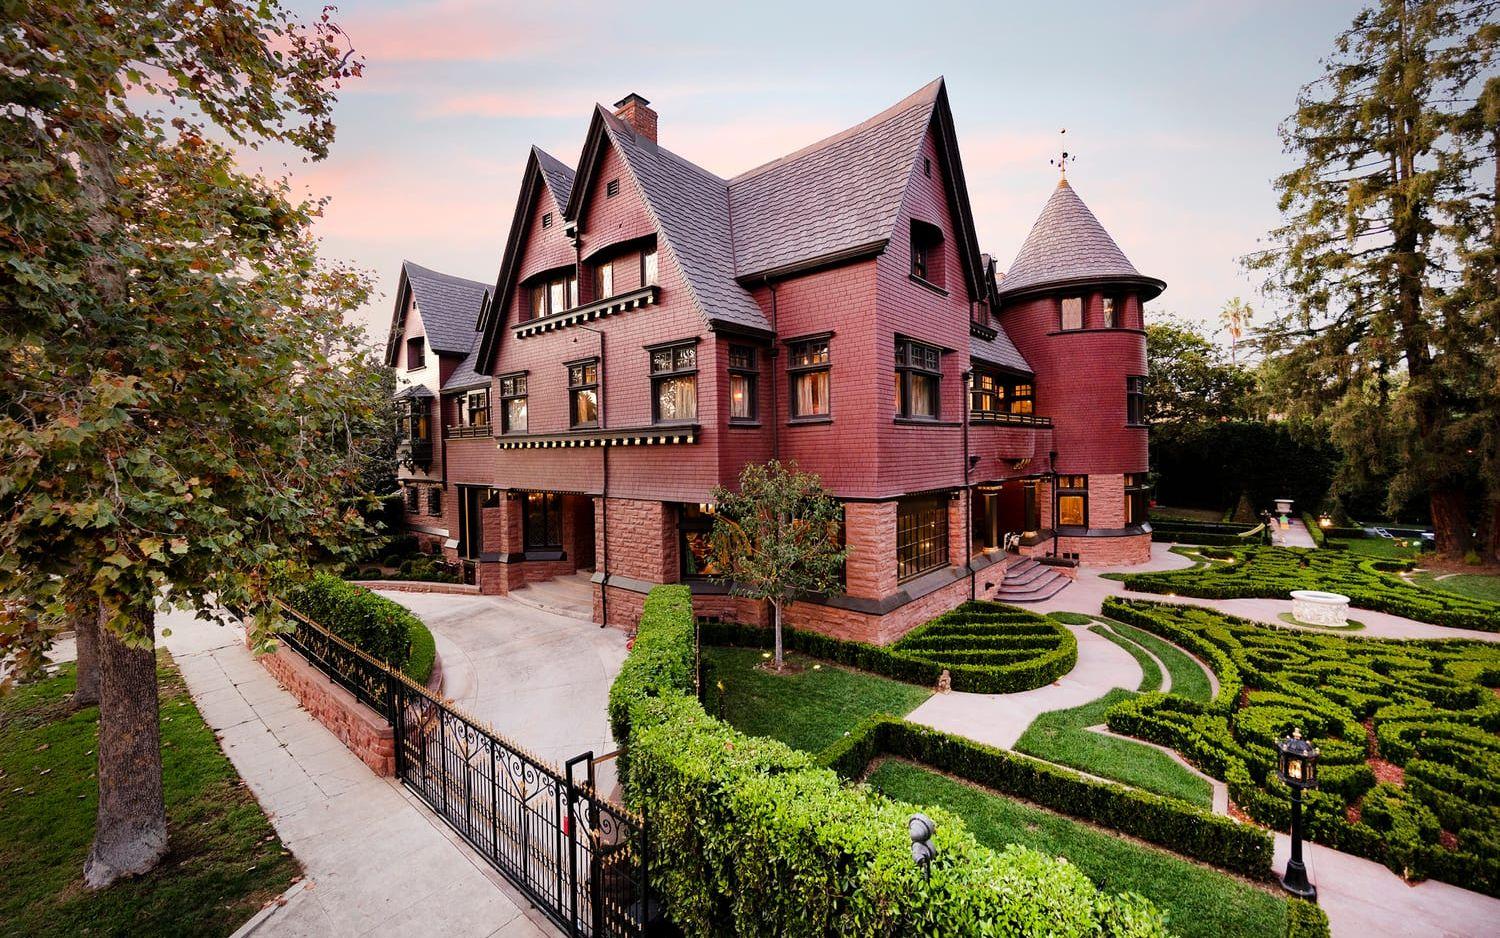 2016 köpte Kat Von D sitt 1800-tals hus i Windsor Square, Los Angeles.